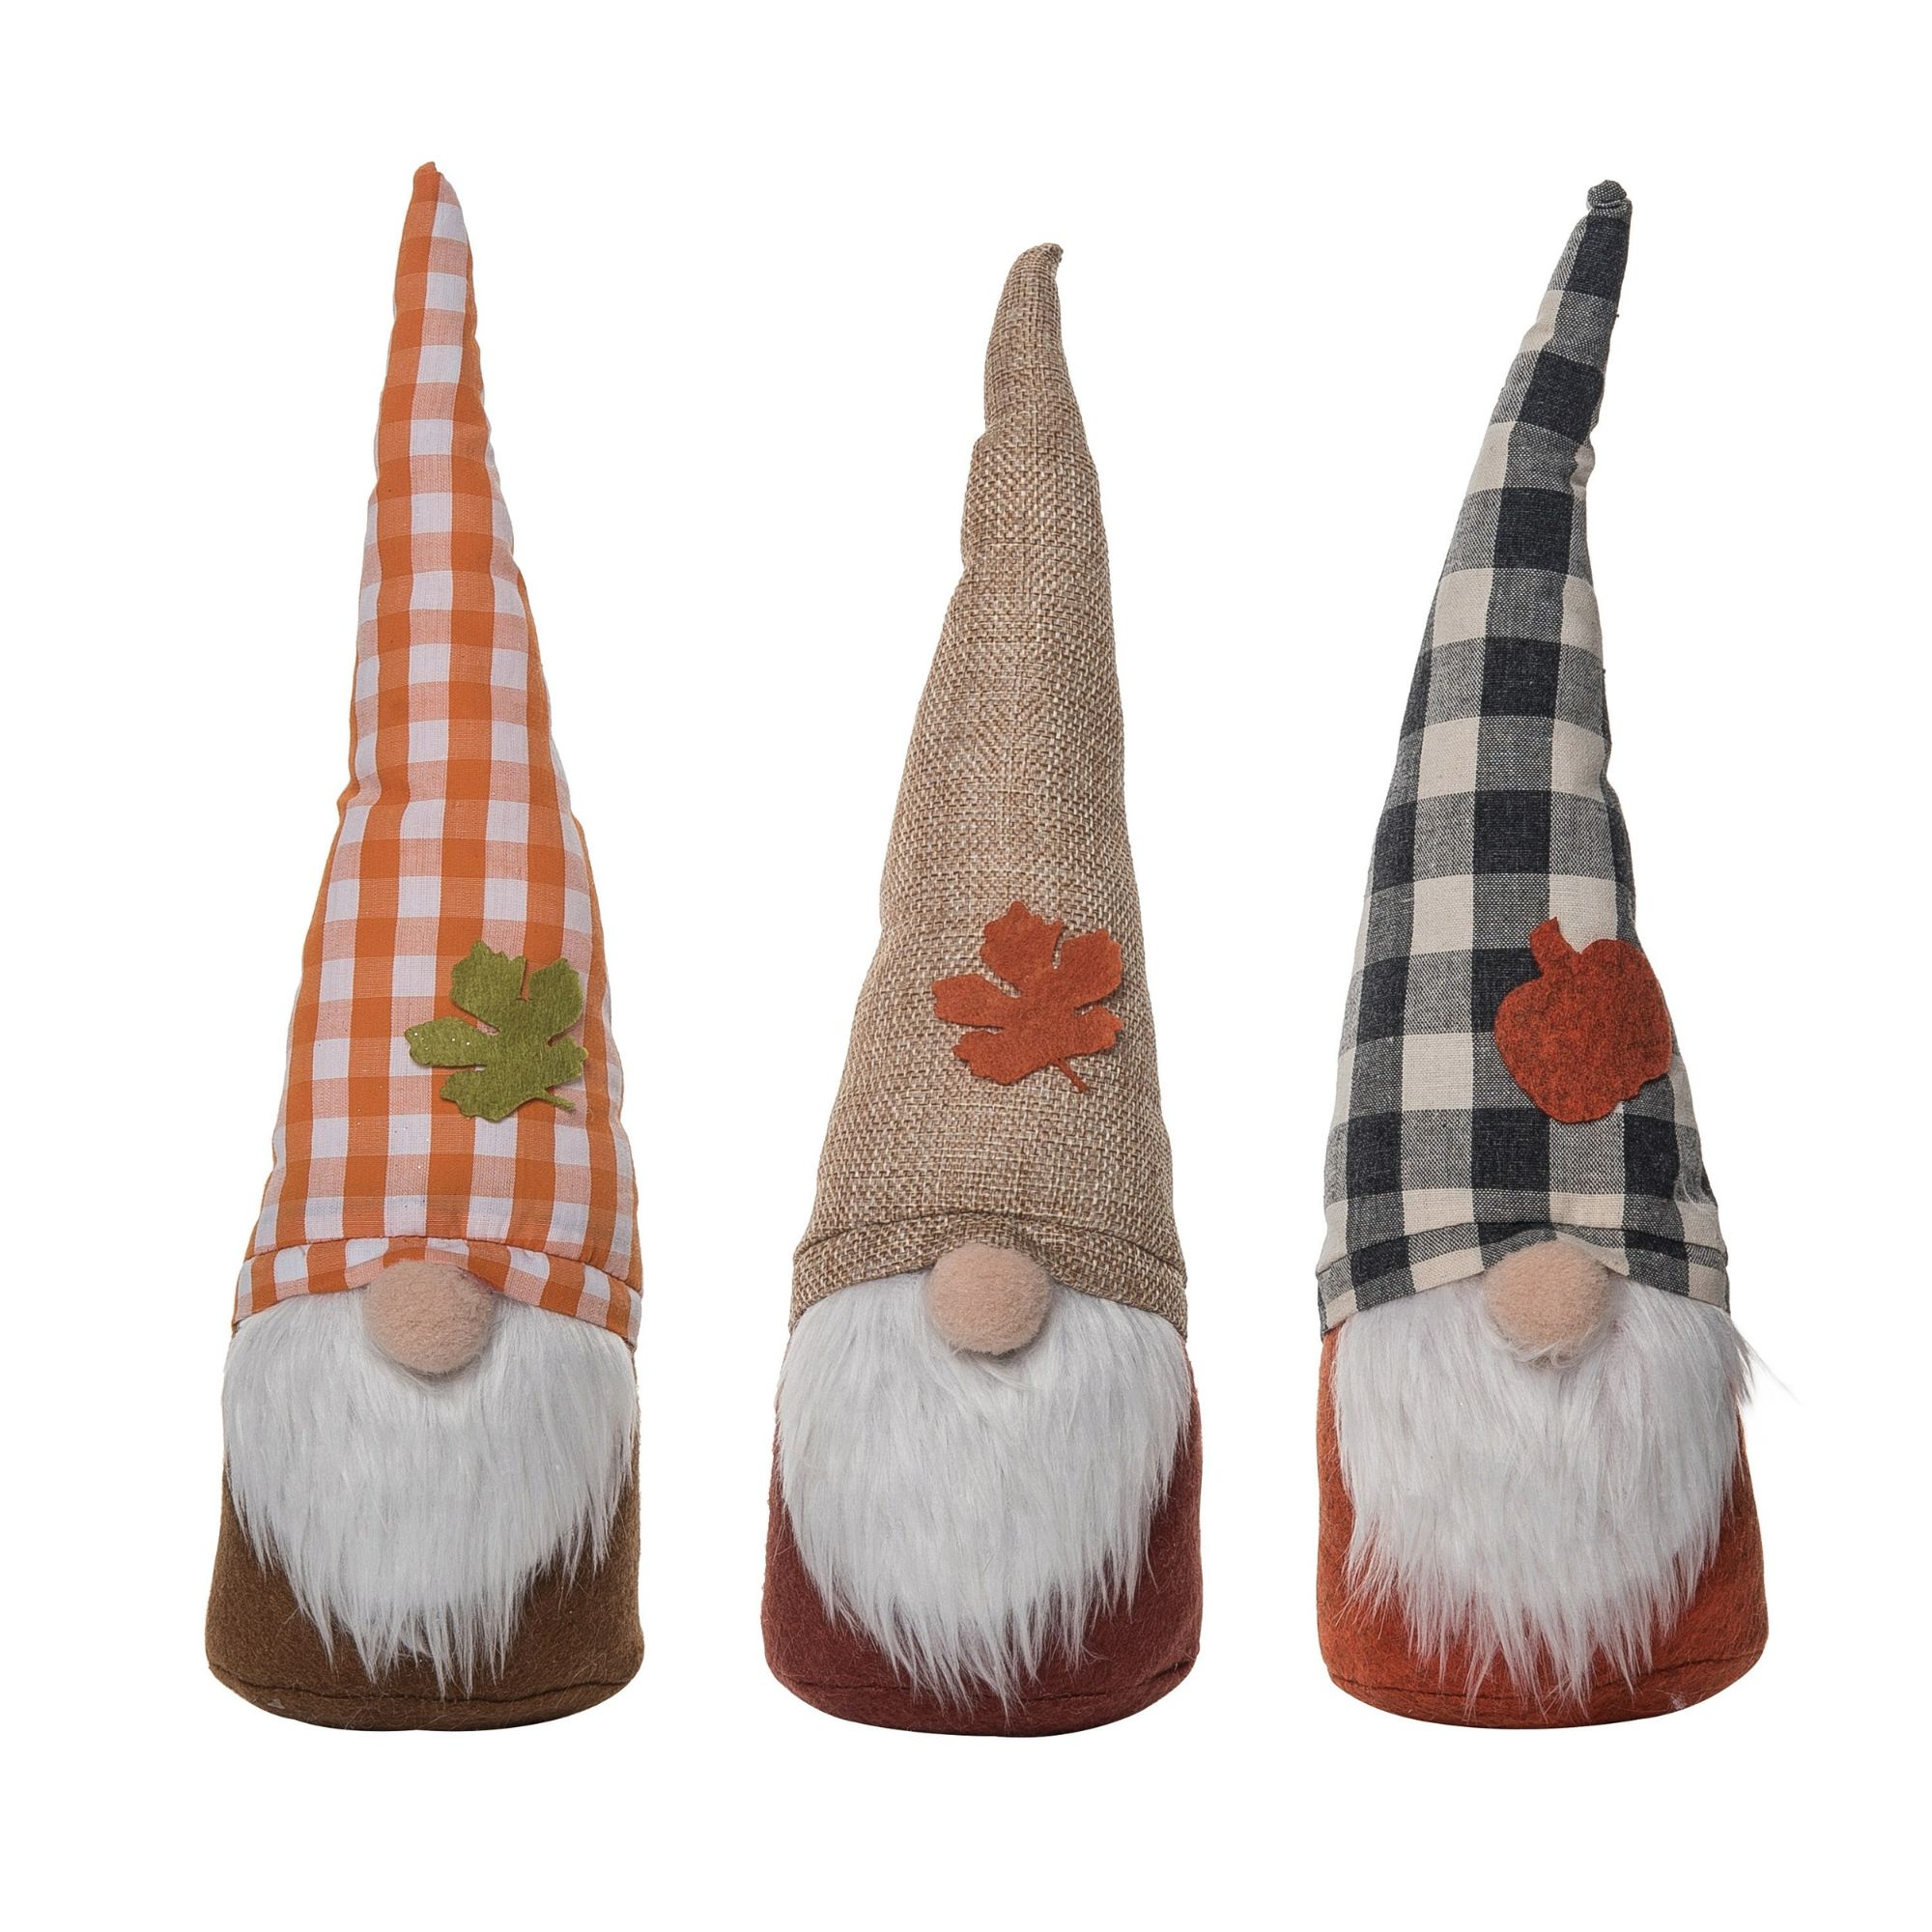 Contemporary Home Living Set of 3 Fuzzy Beard Gnome Fall Harvest Tabletop Figurines 12"